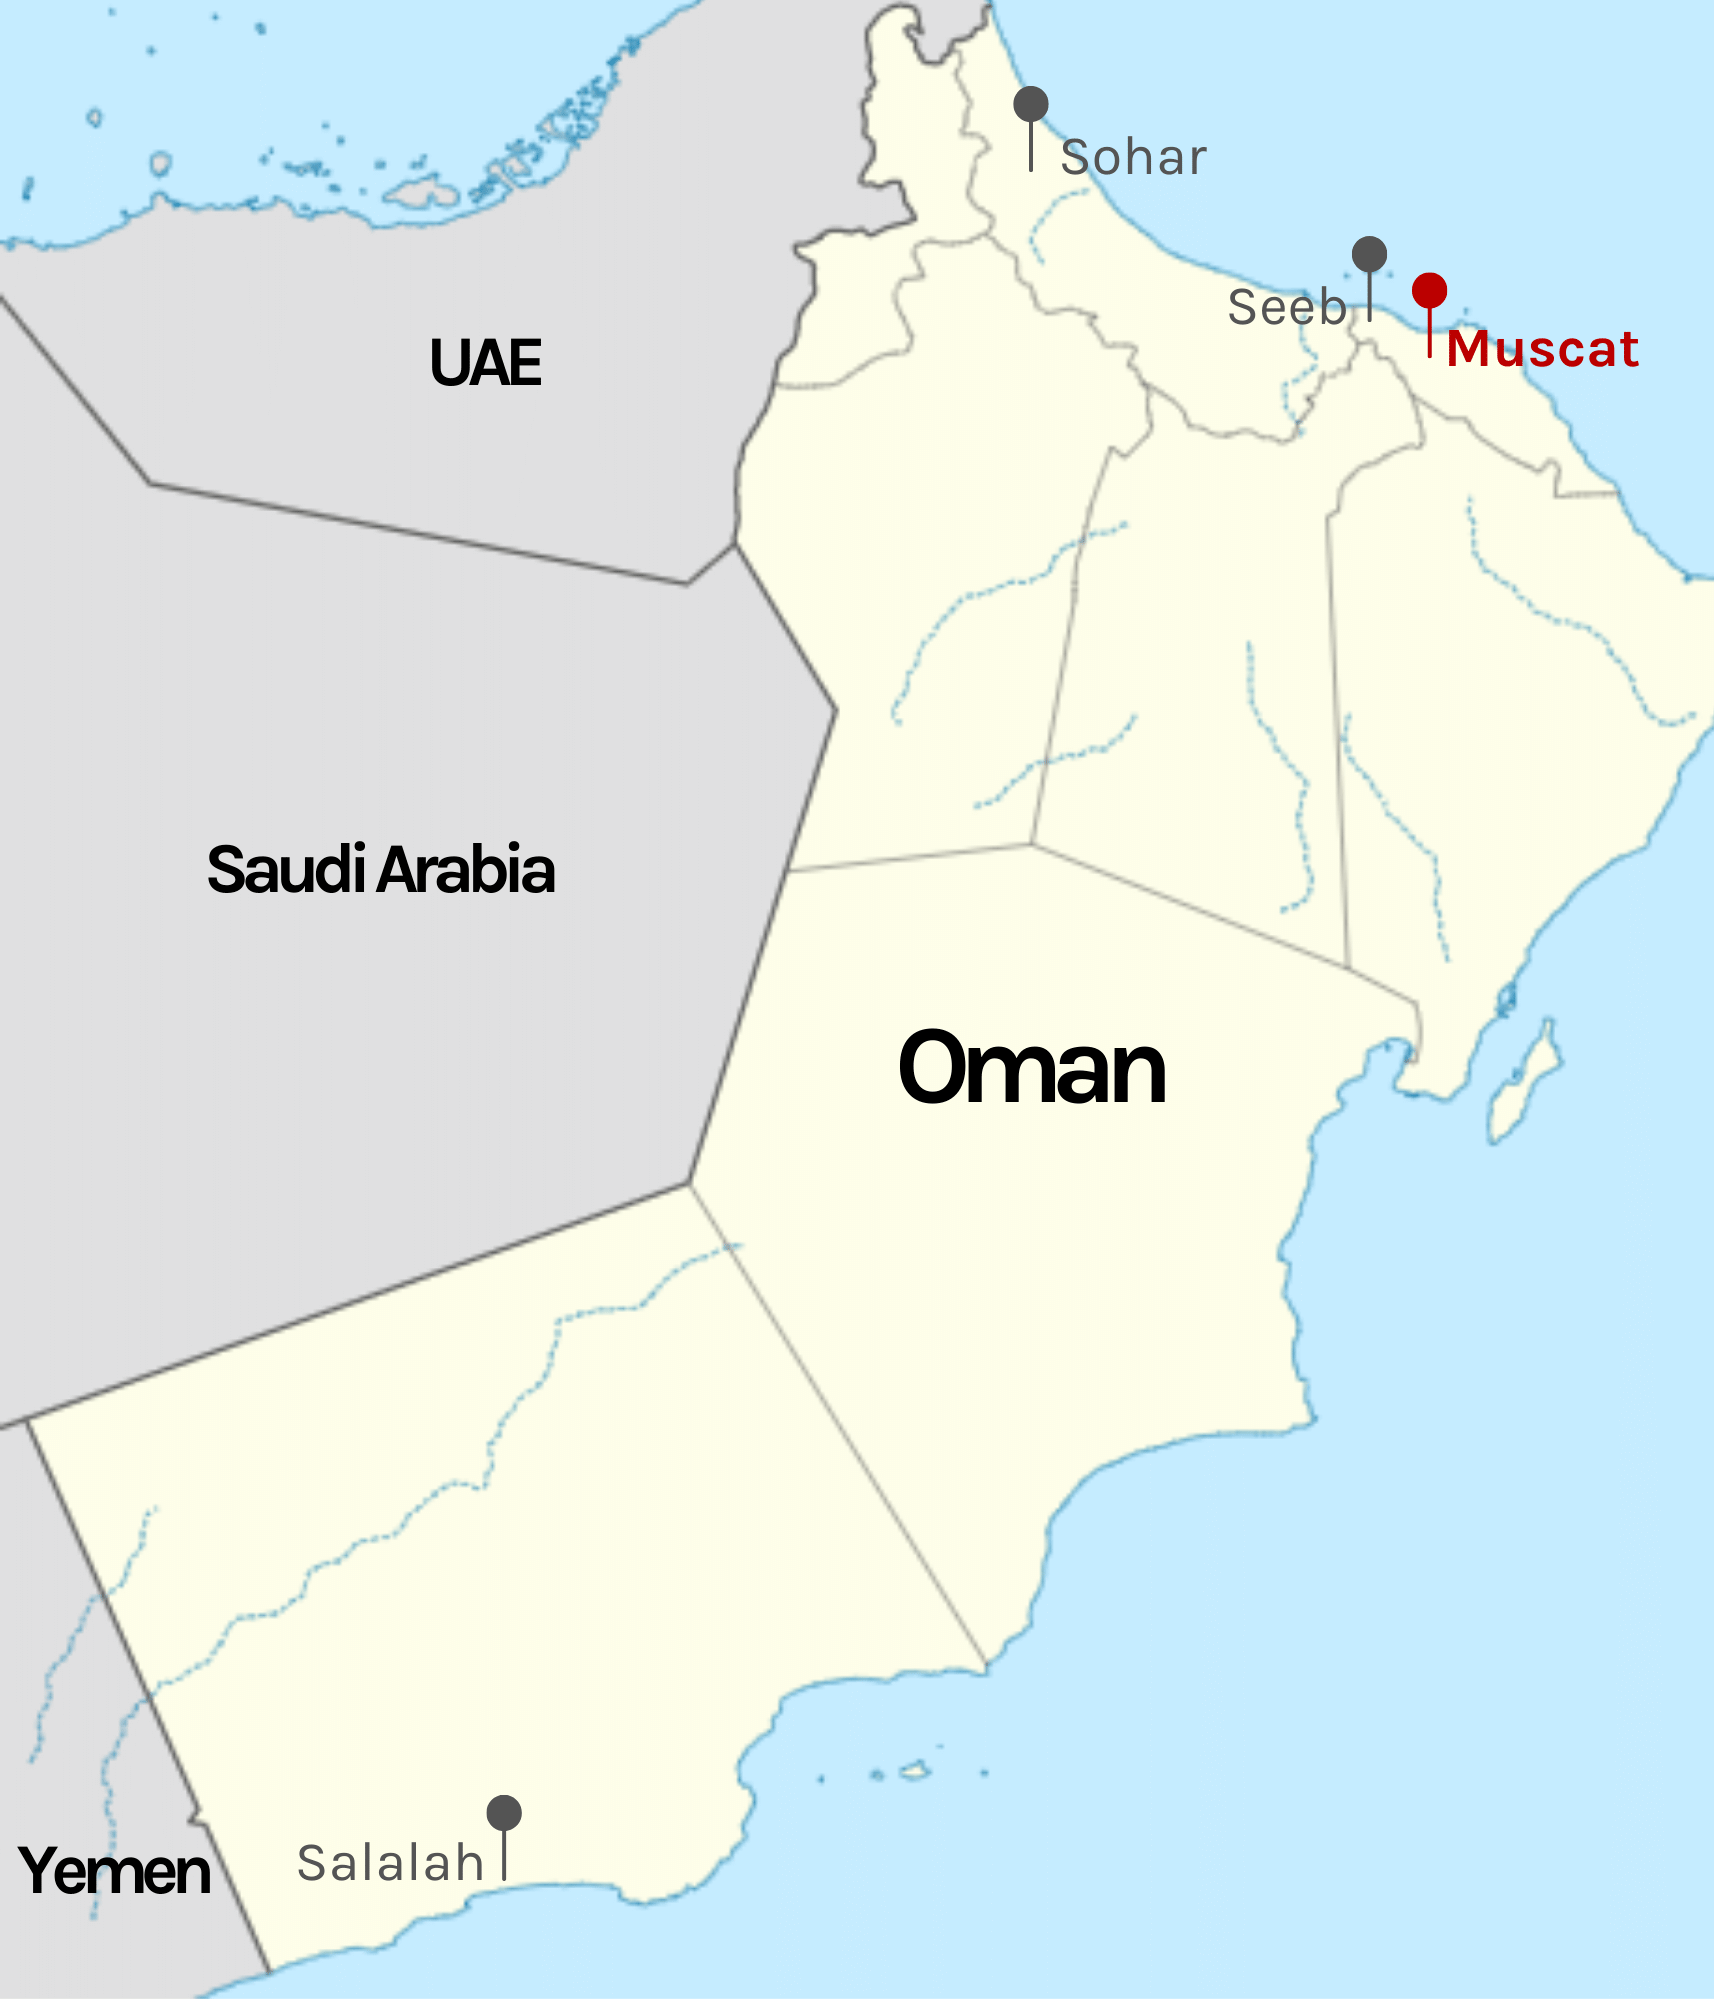 Muscat map